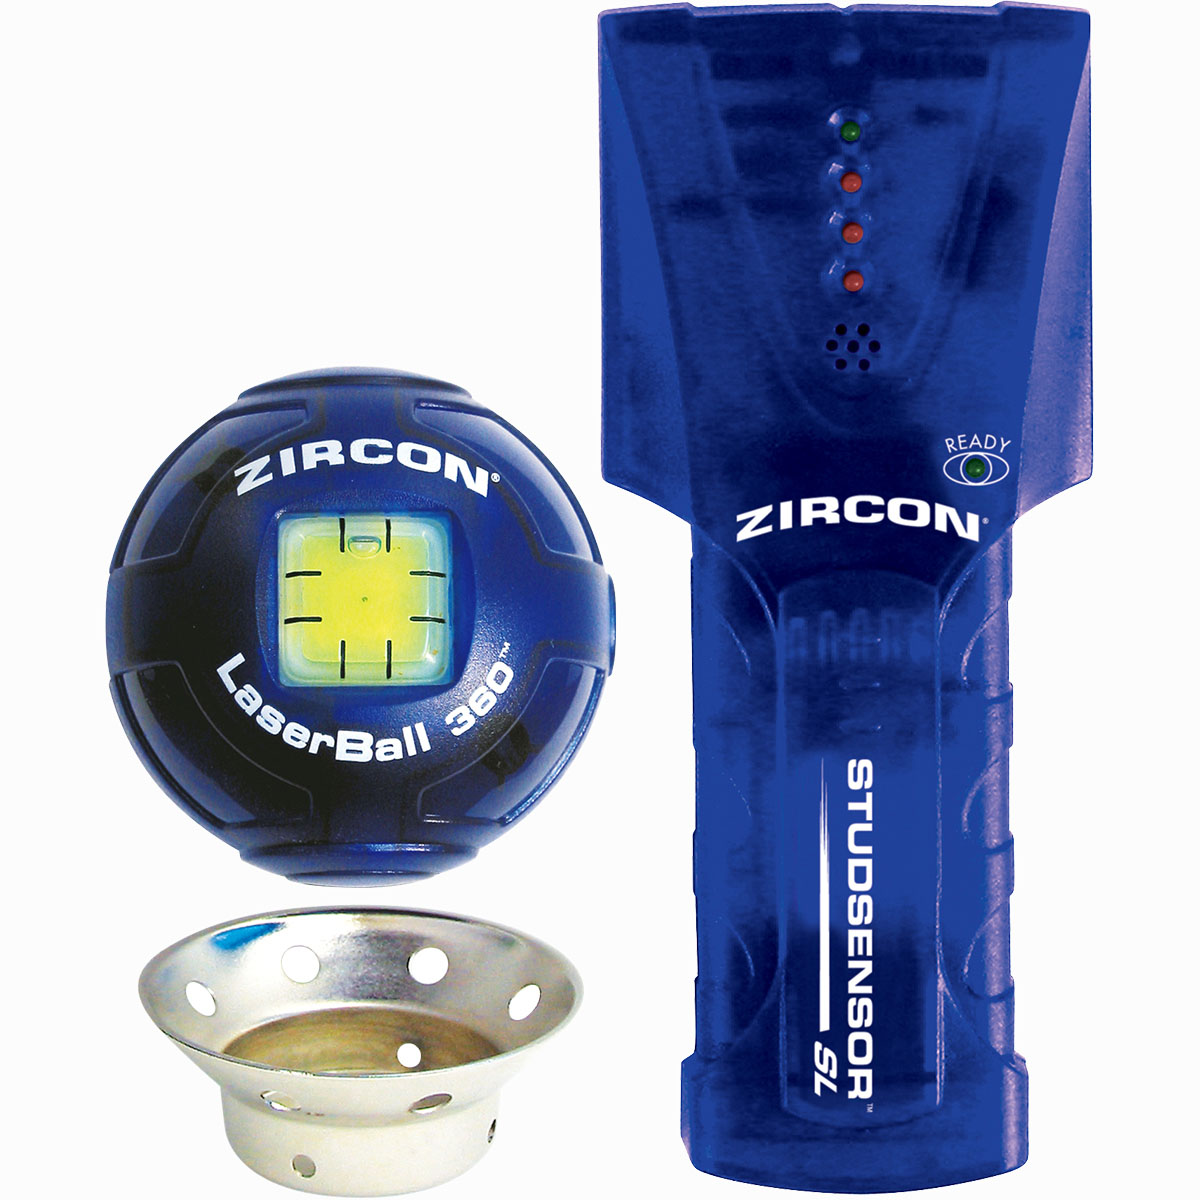 Zircon LaserBall 360 Decorating Kit